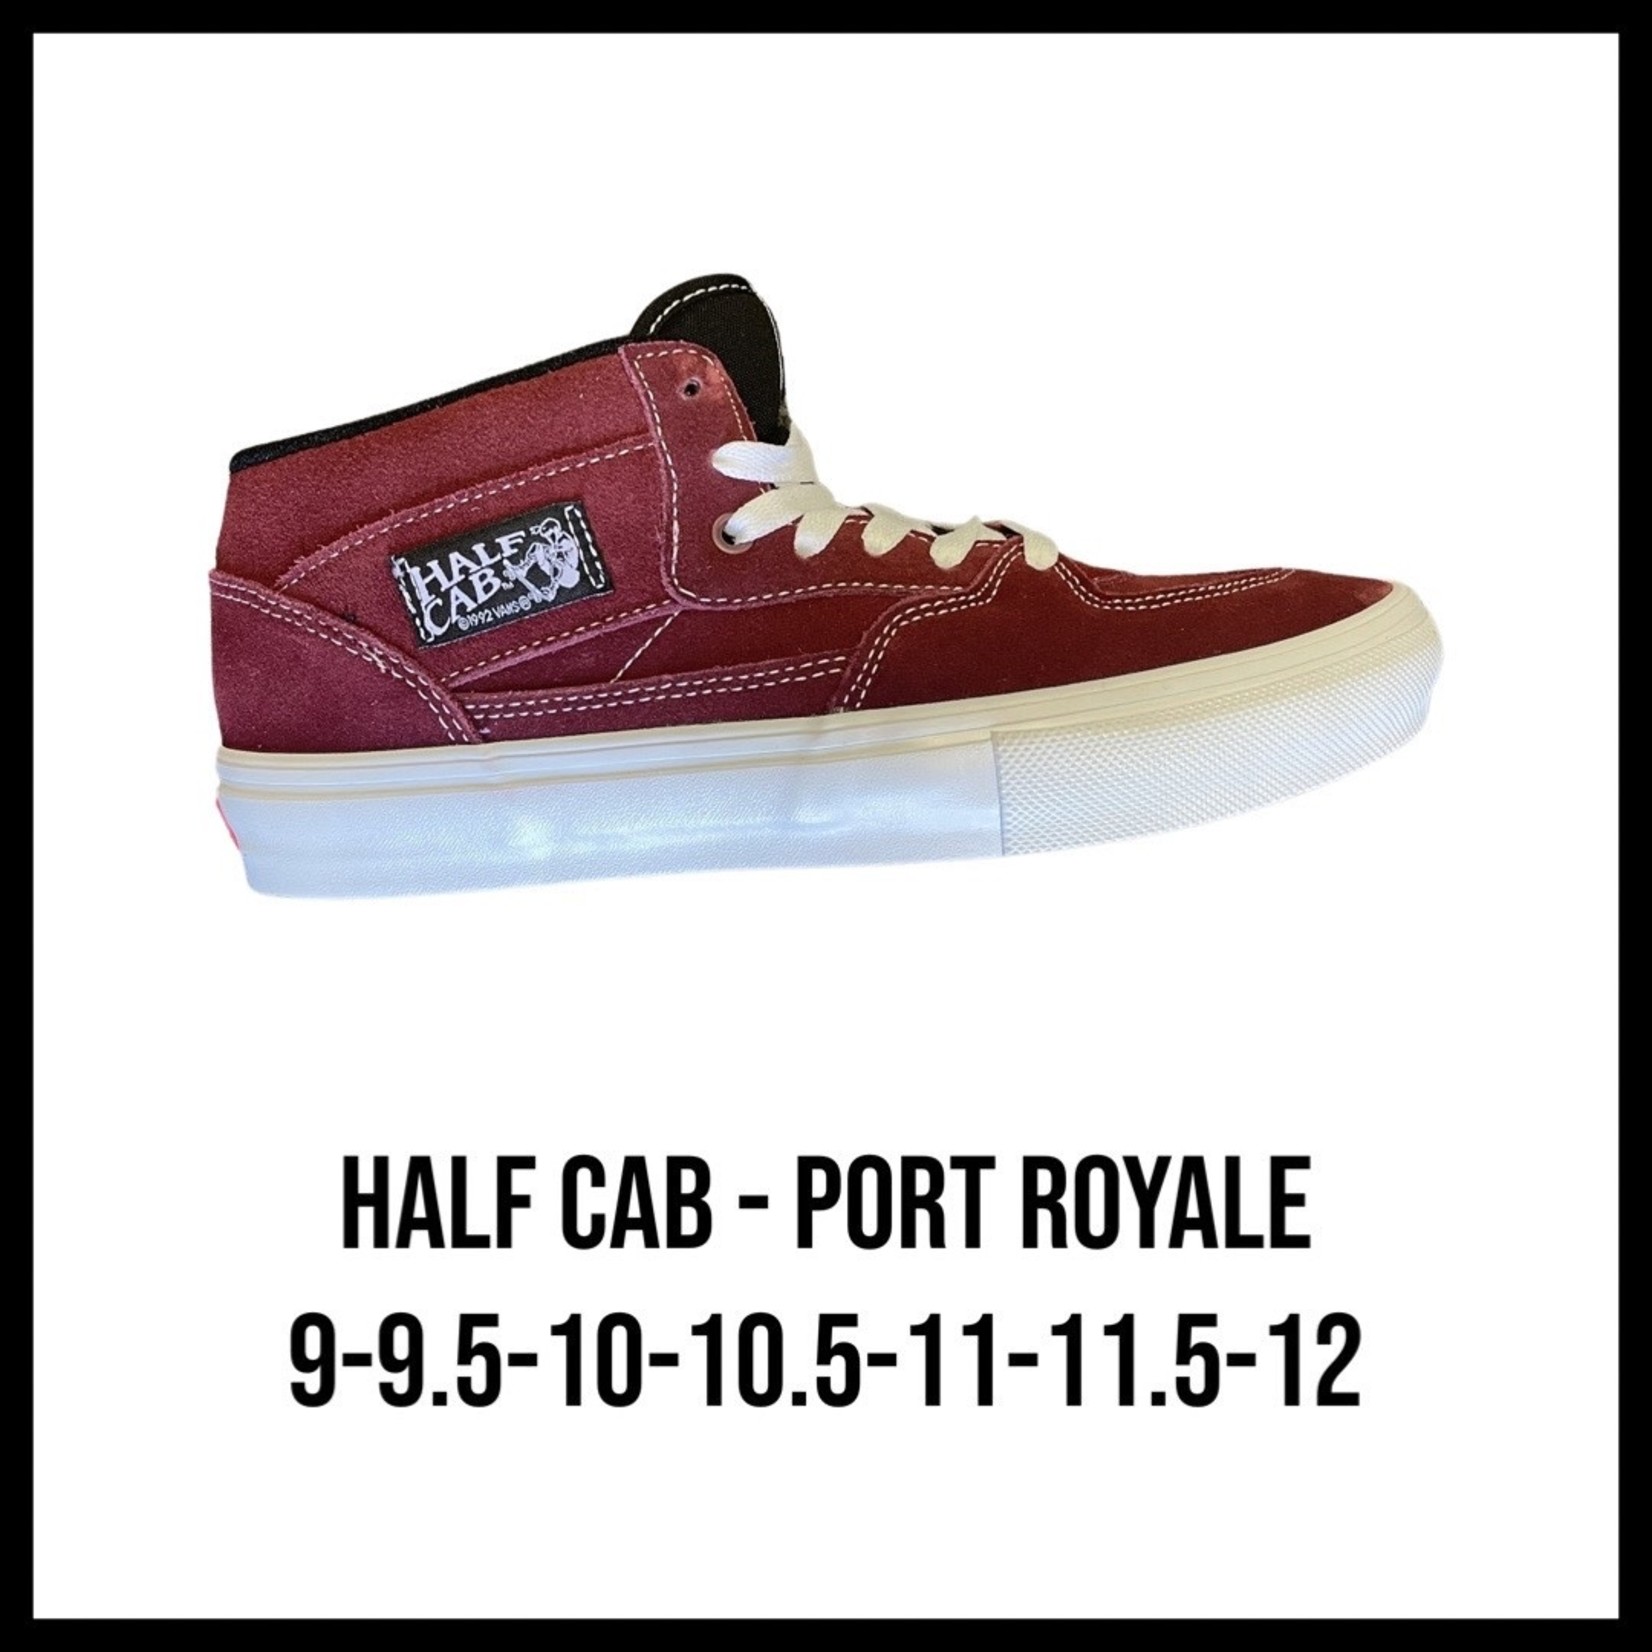 Vans Vans Half Cab Pro Skate Shoes - Port Royale